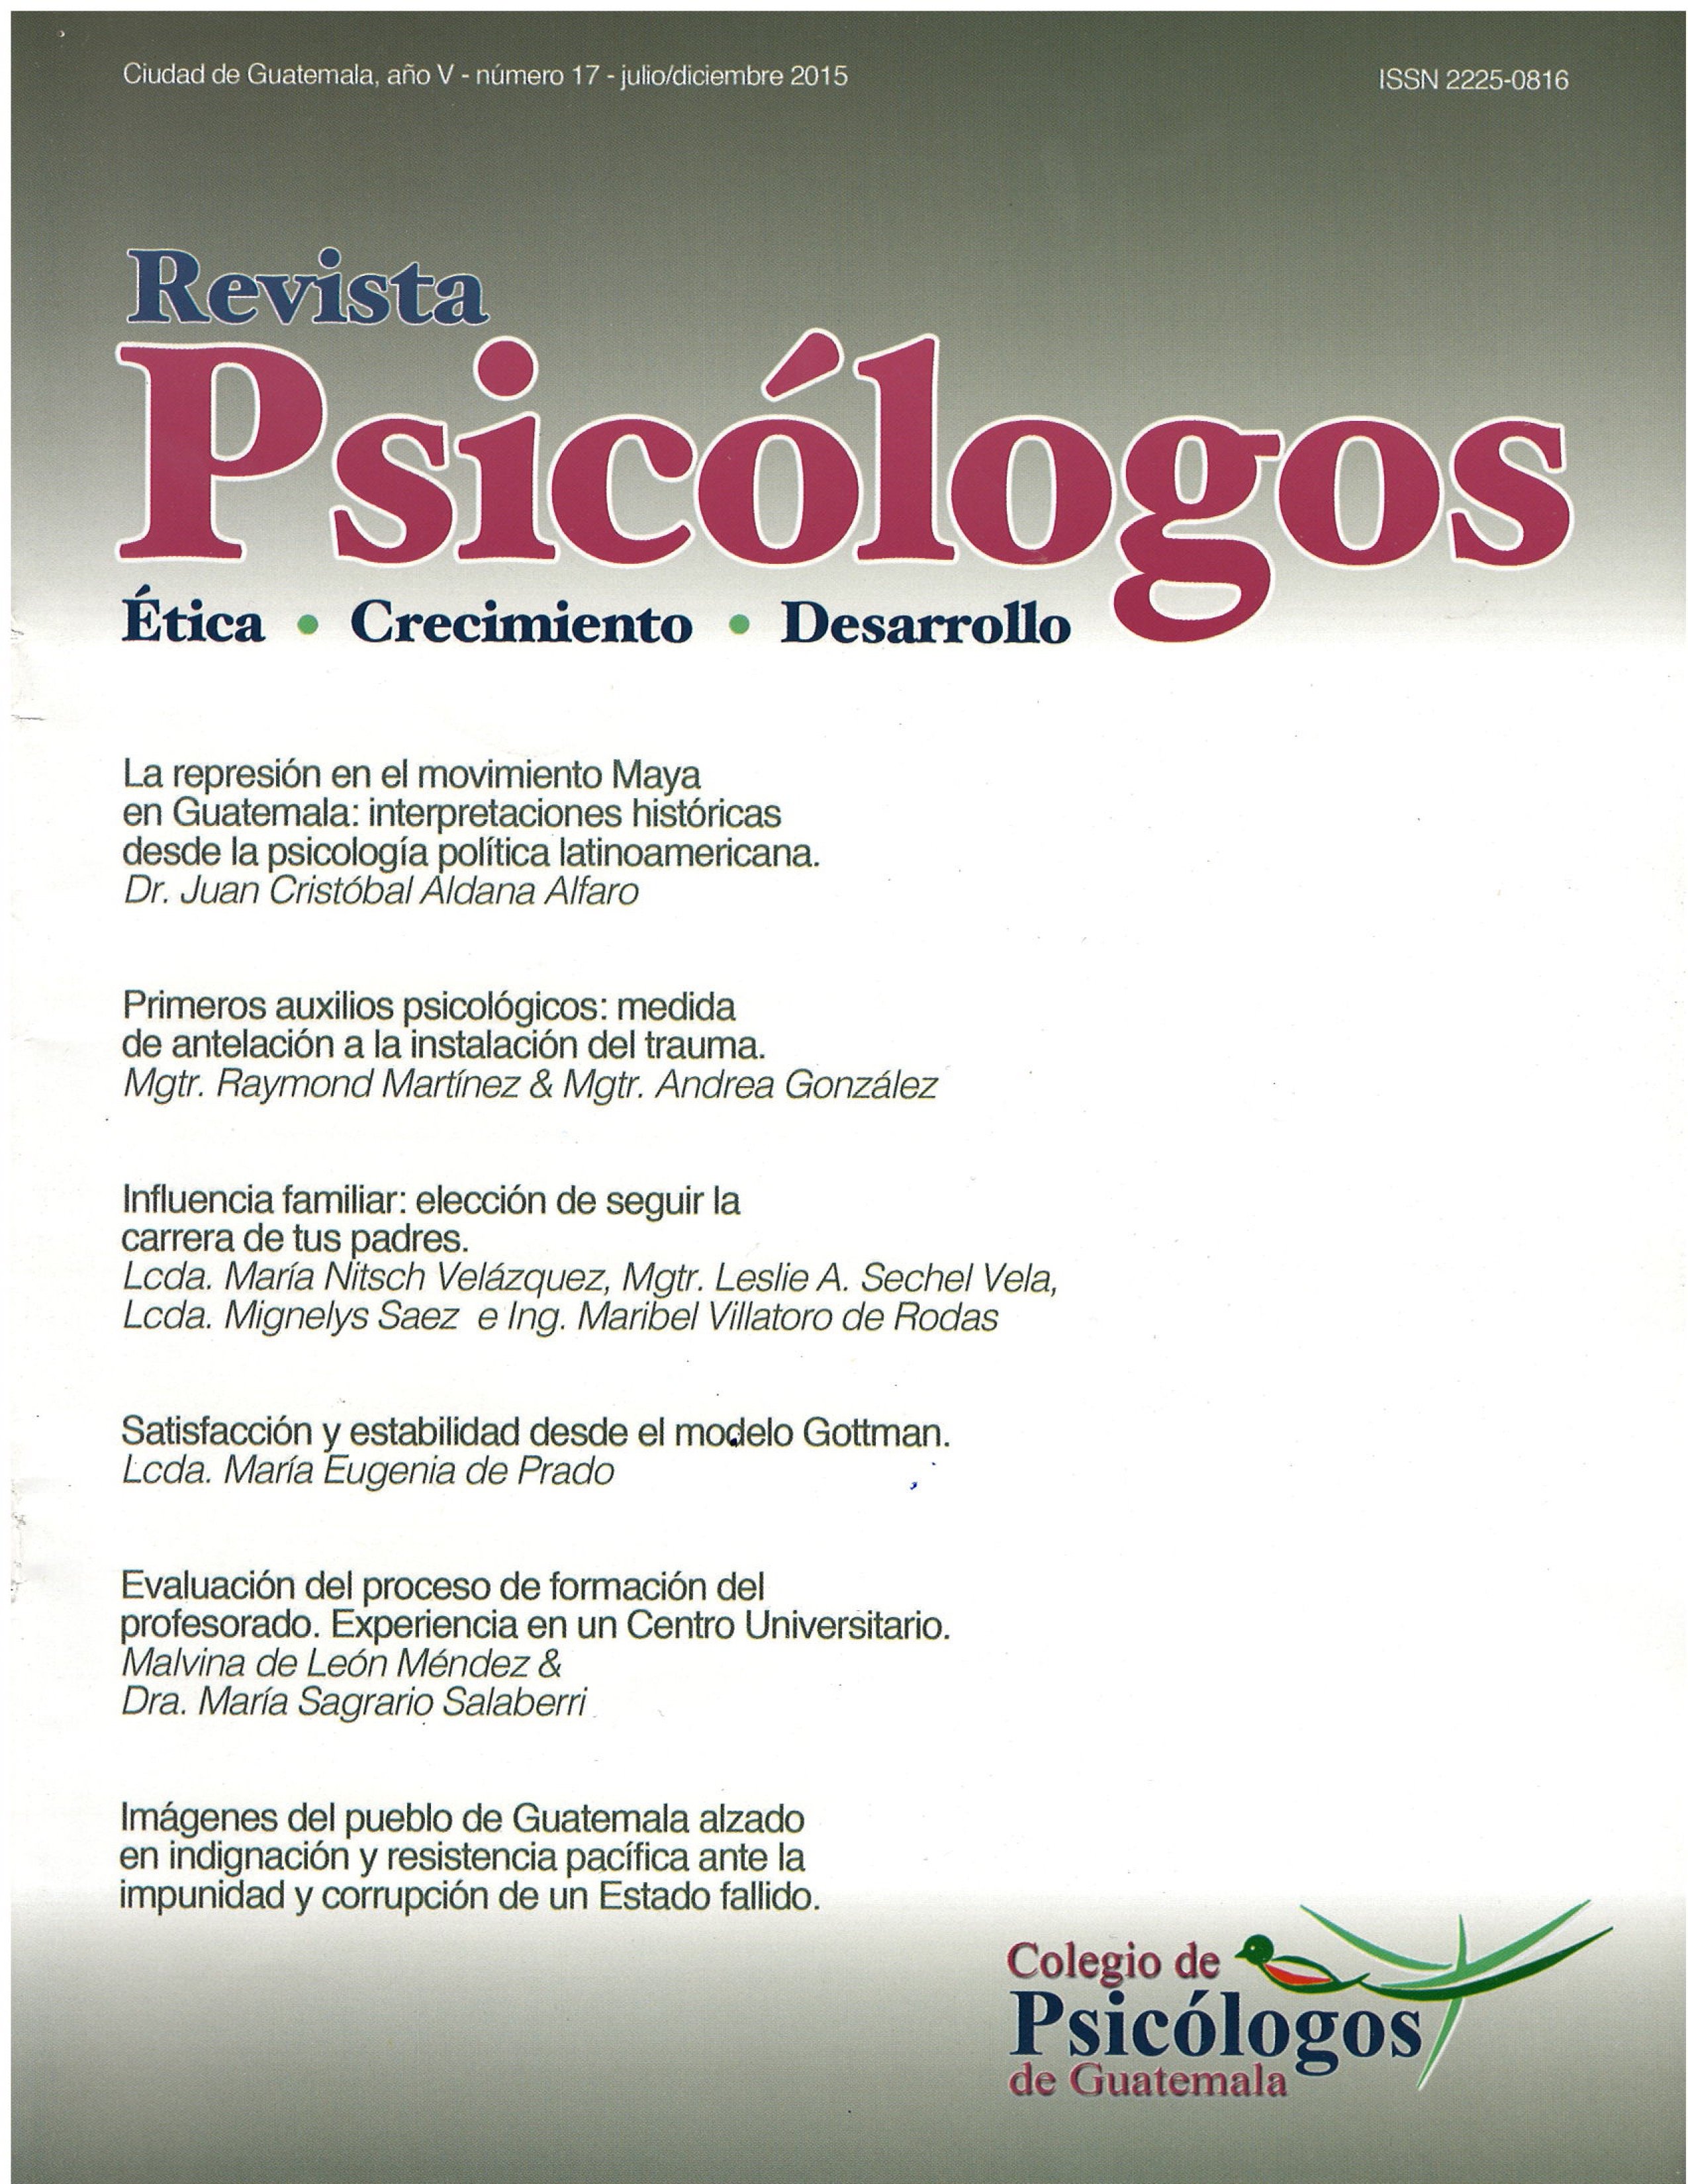 					Ver Vol. 5 Núm. 17 (2015): Revista Psicólogos No. 17
				